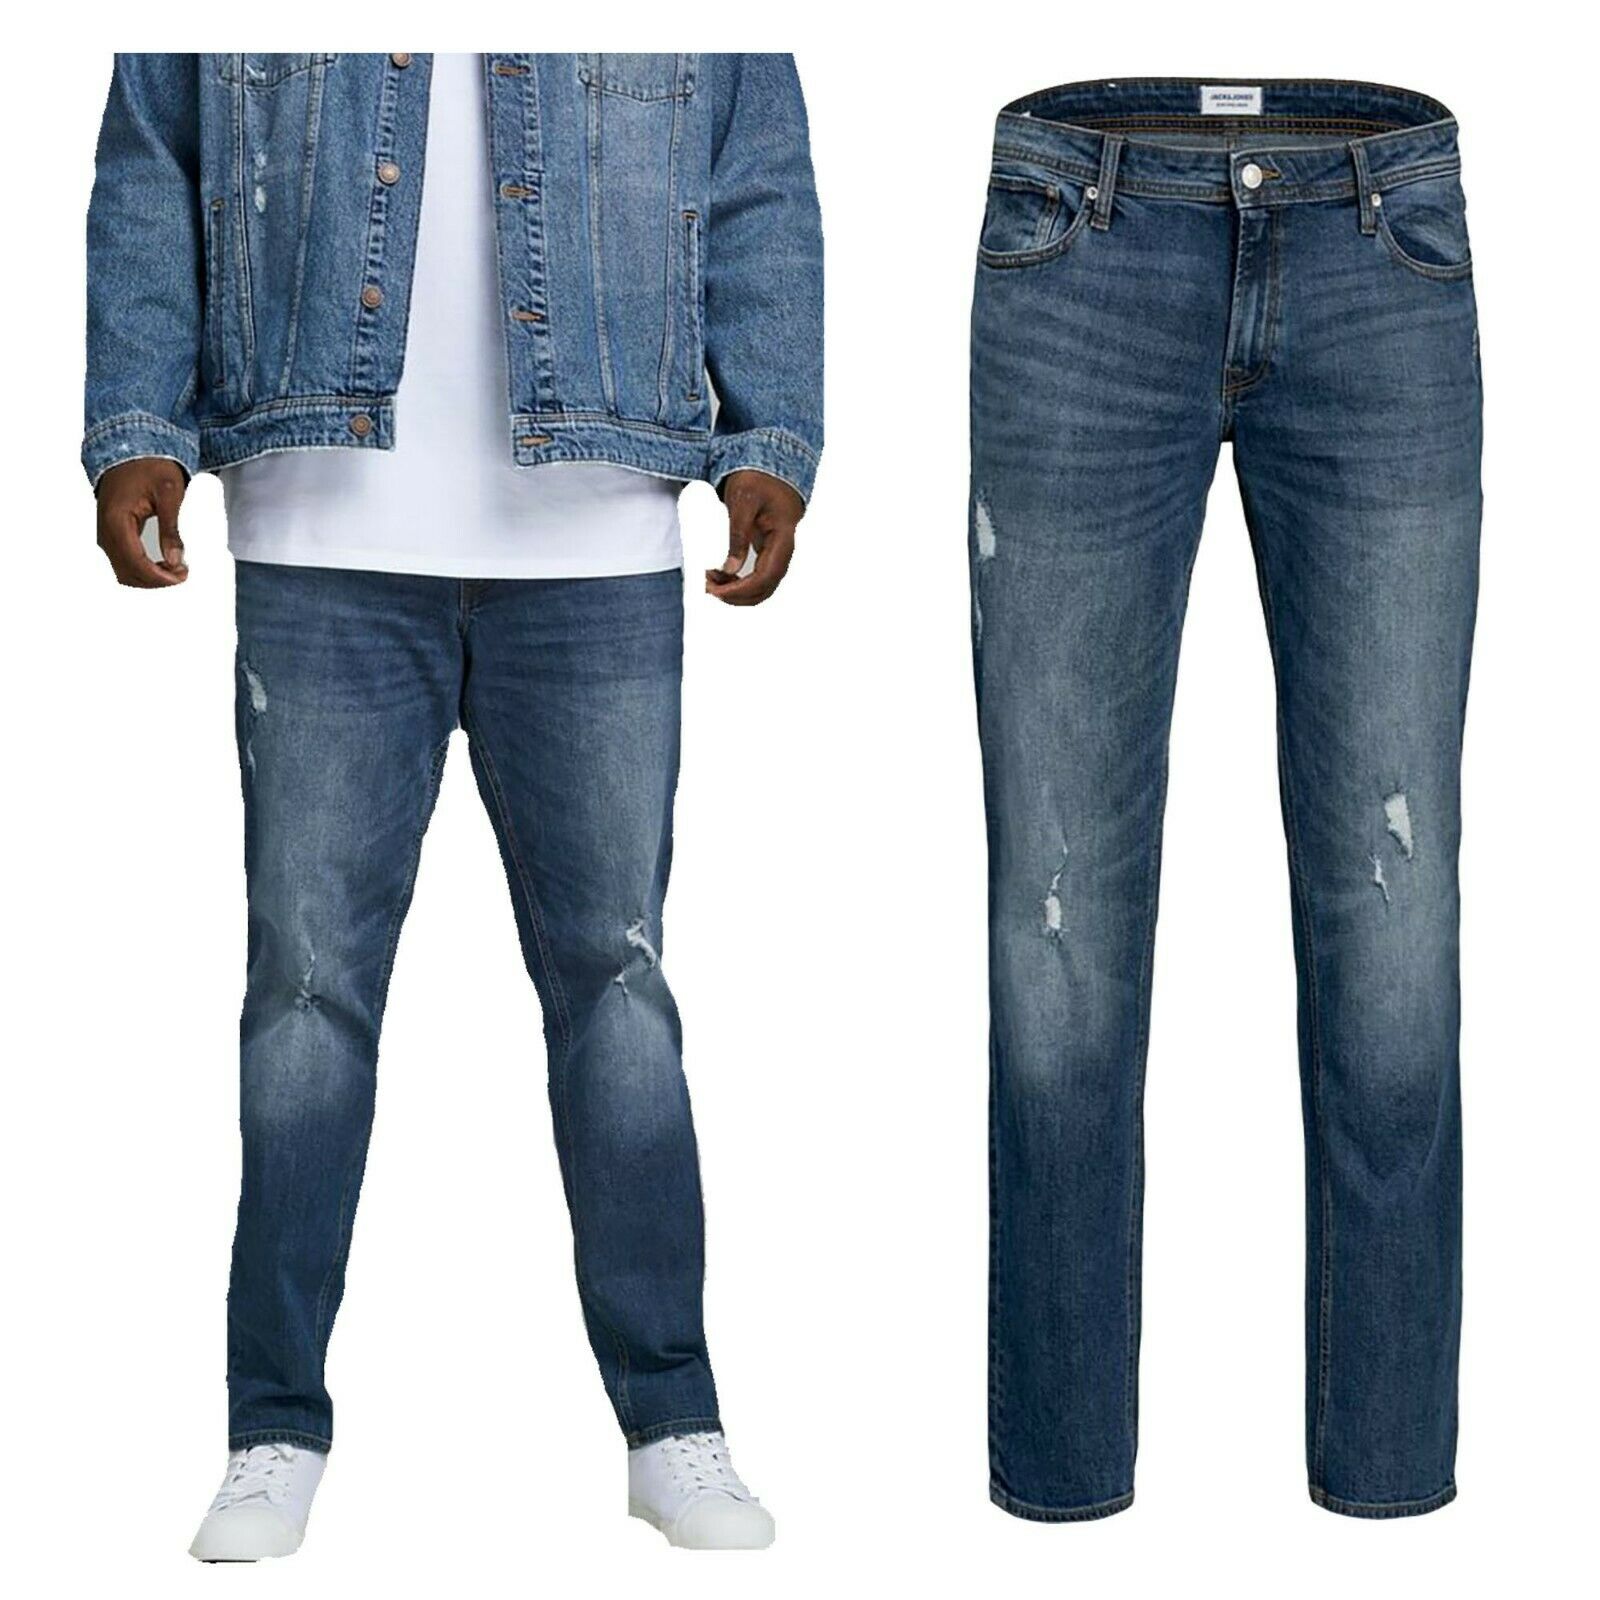 54 size jeans